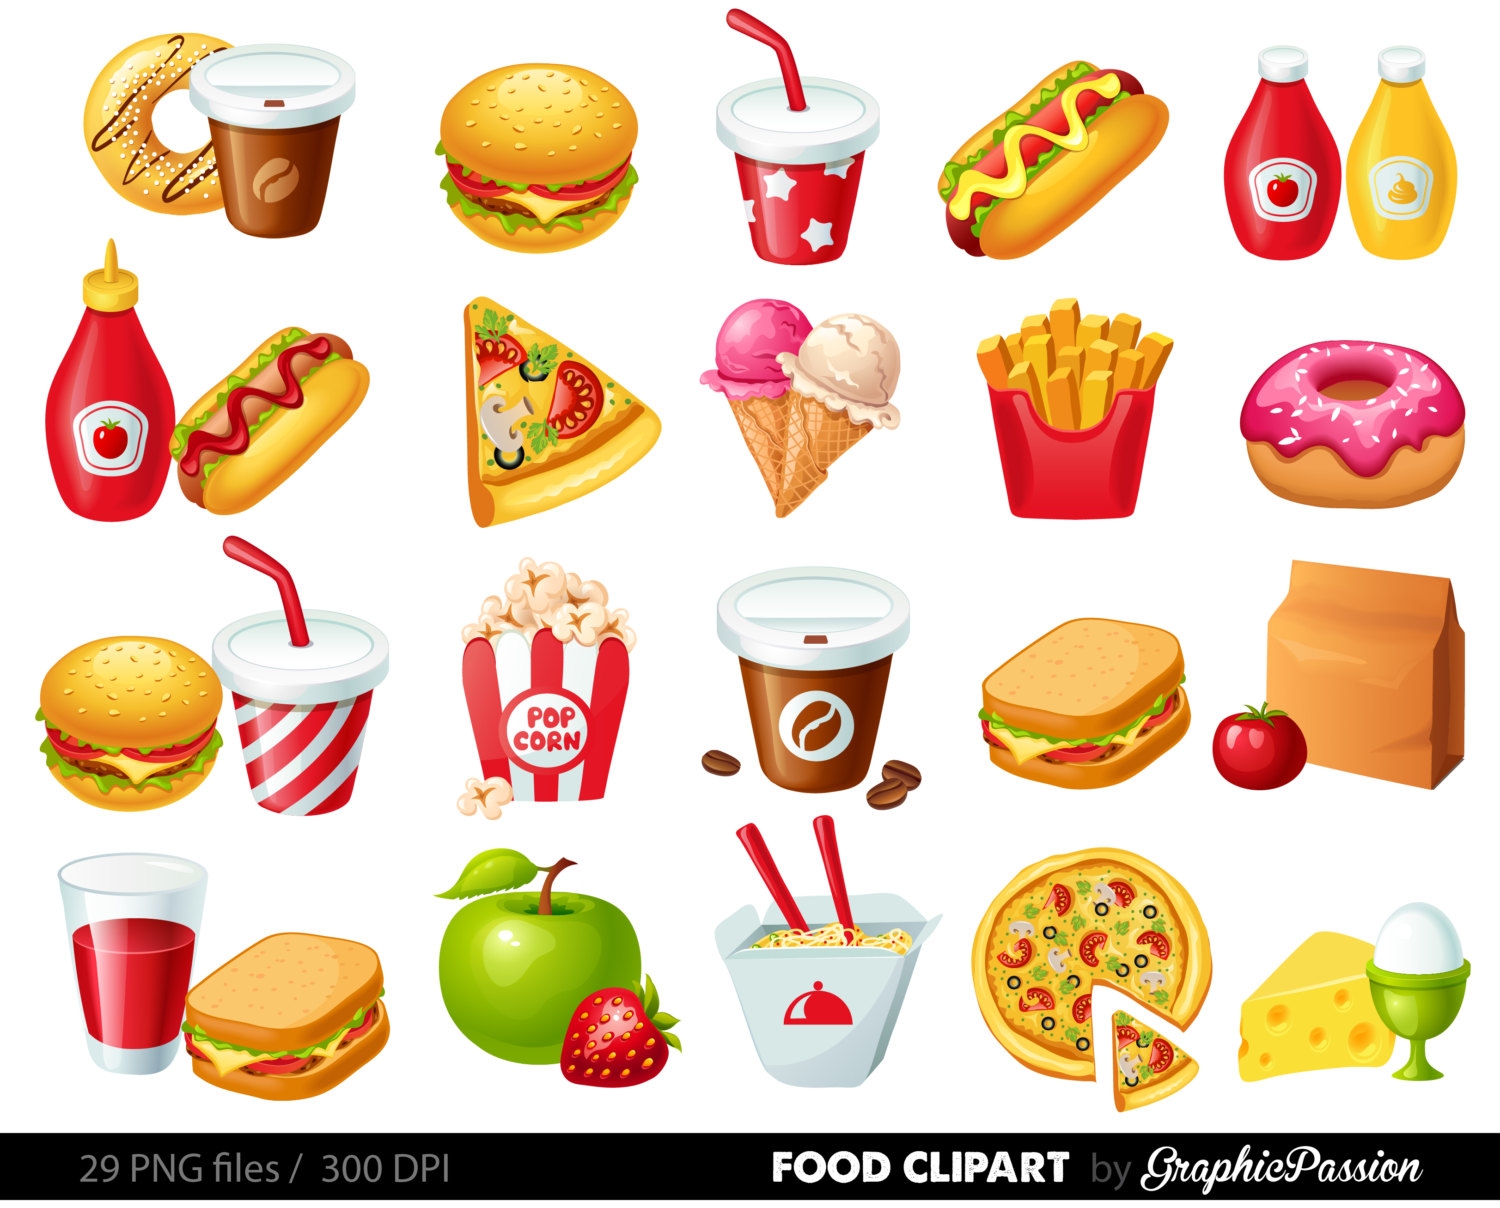 Food images clipart - ClipartFest